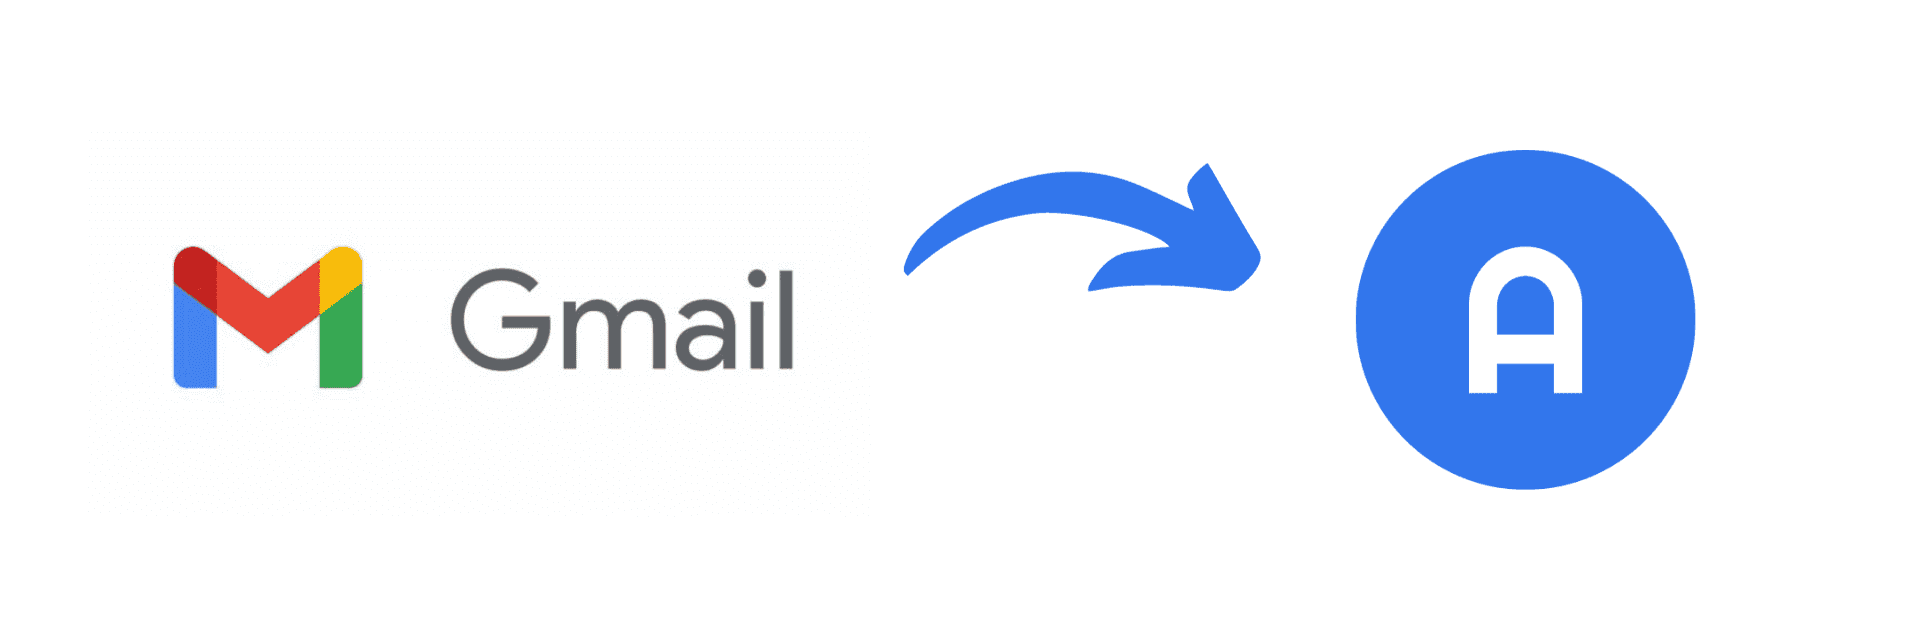 Grafik: Pfeil vom Gmail Logo zum apocha Logo